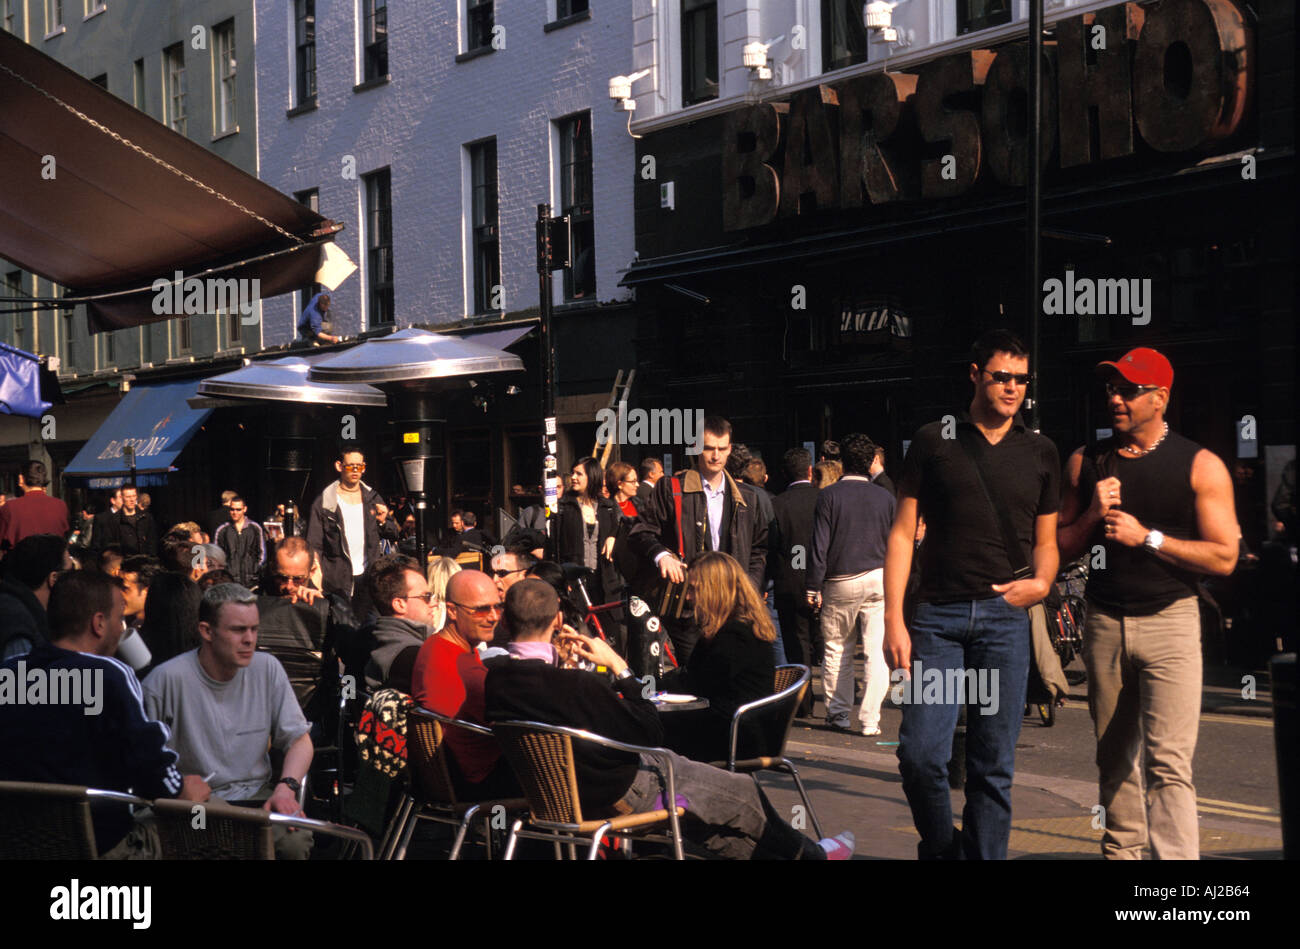 Cafe life in Old Compton Street, Soho, London England UK Stock Photo